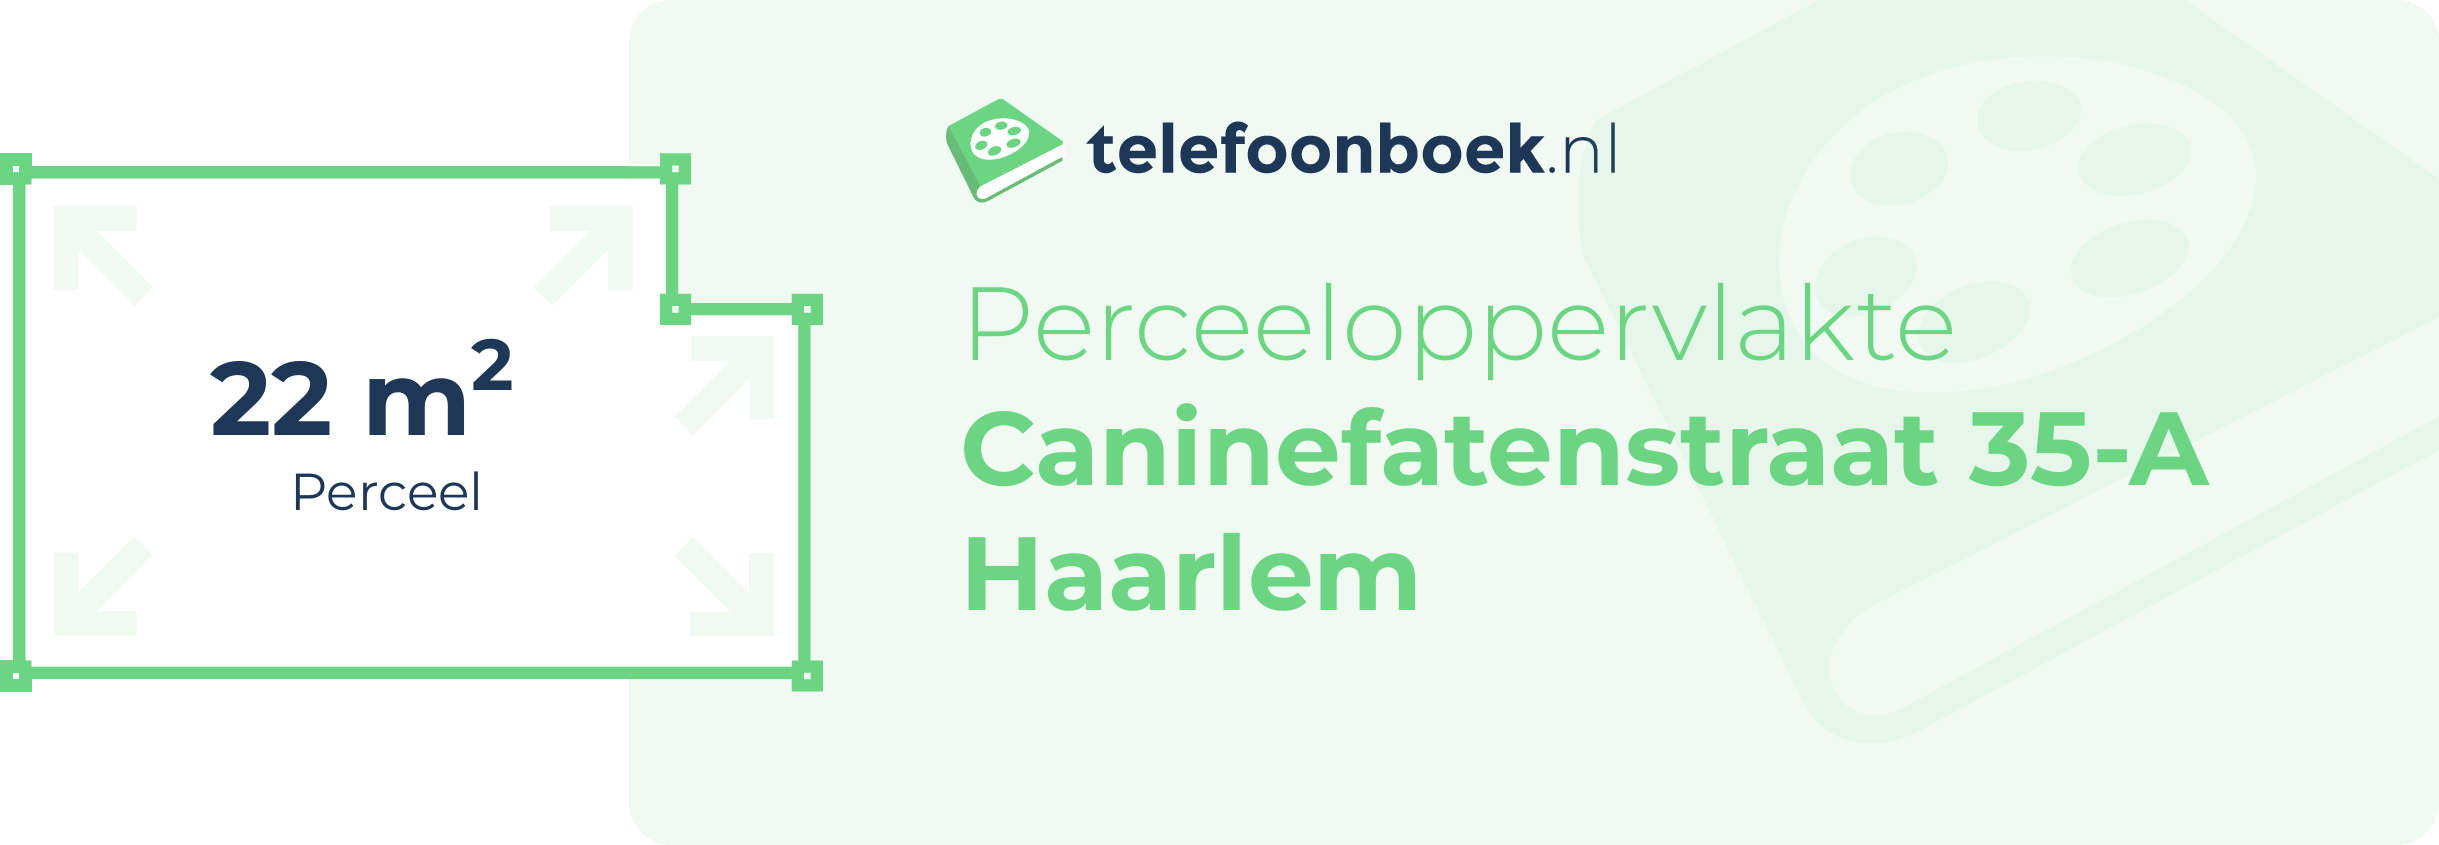 Perceeloppervlakte Caninefatenstraat 35-A Haarlem